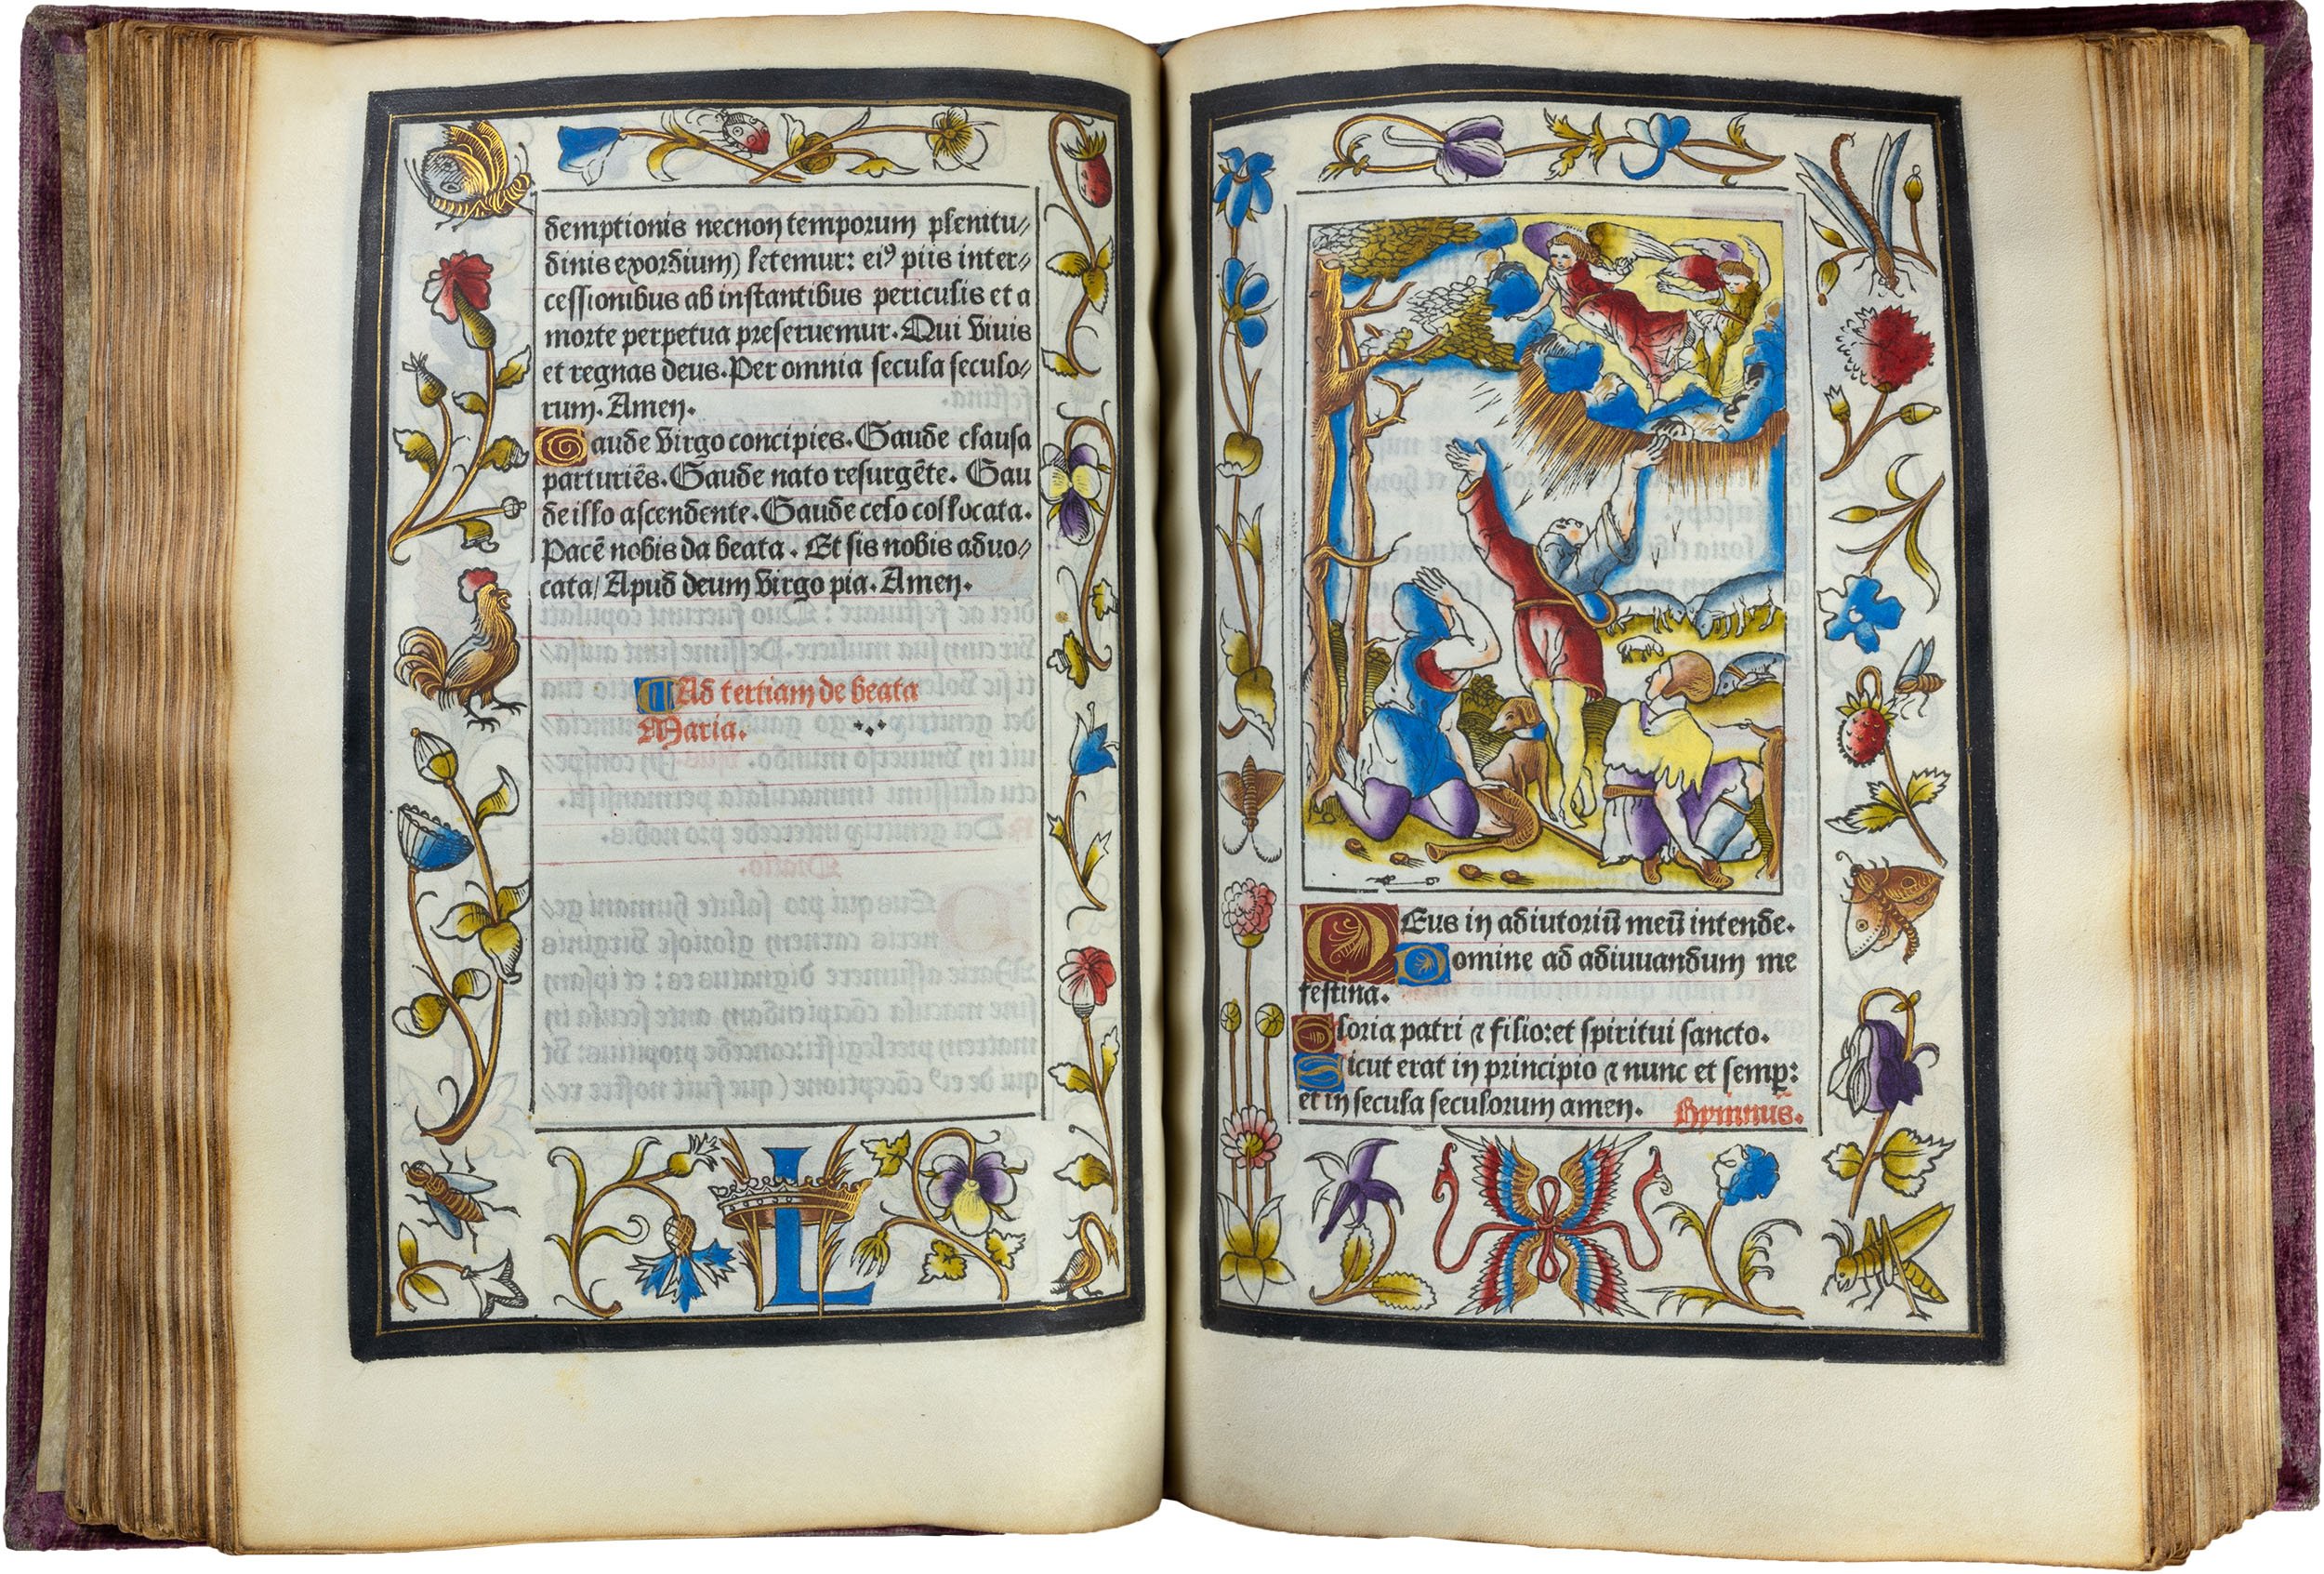 geoffroy-tory-printed-book-of-hours-illuminated-vellum-22-october-1527-prince-dessing-villeneuve-horae-bmv-72.jpg